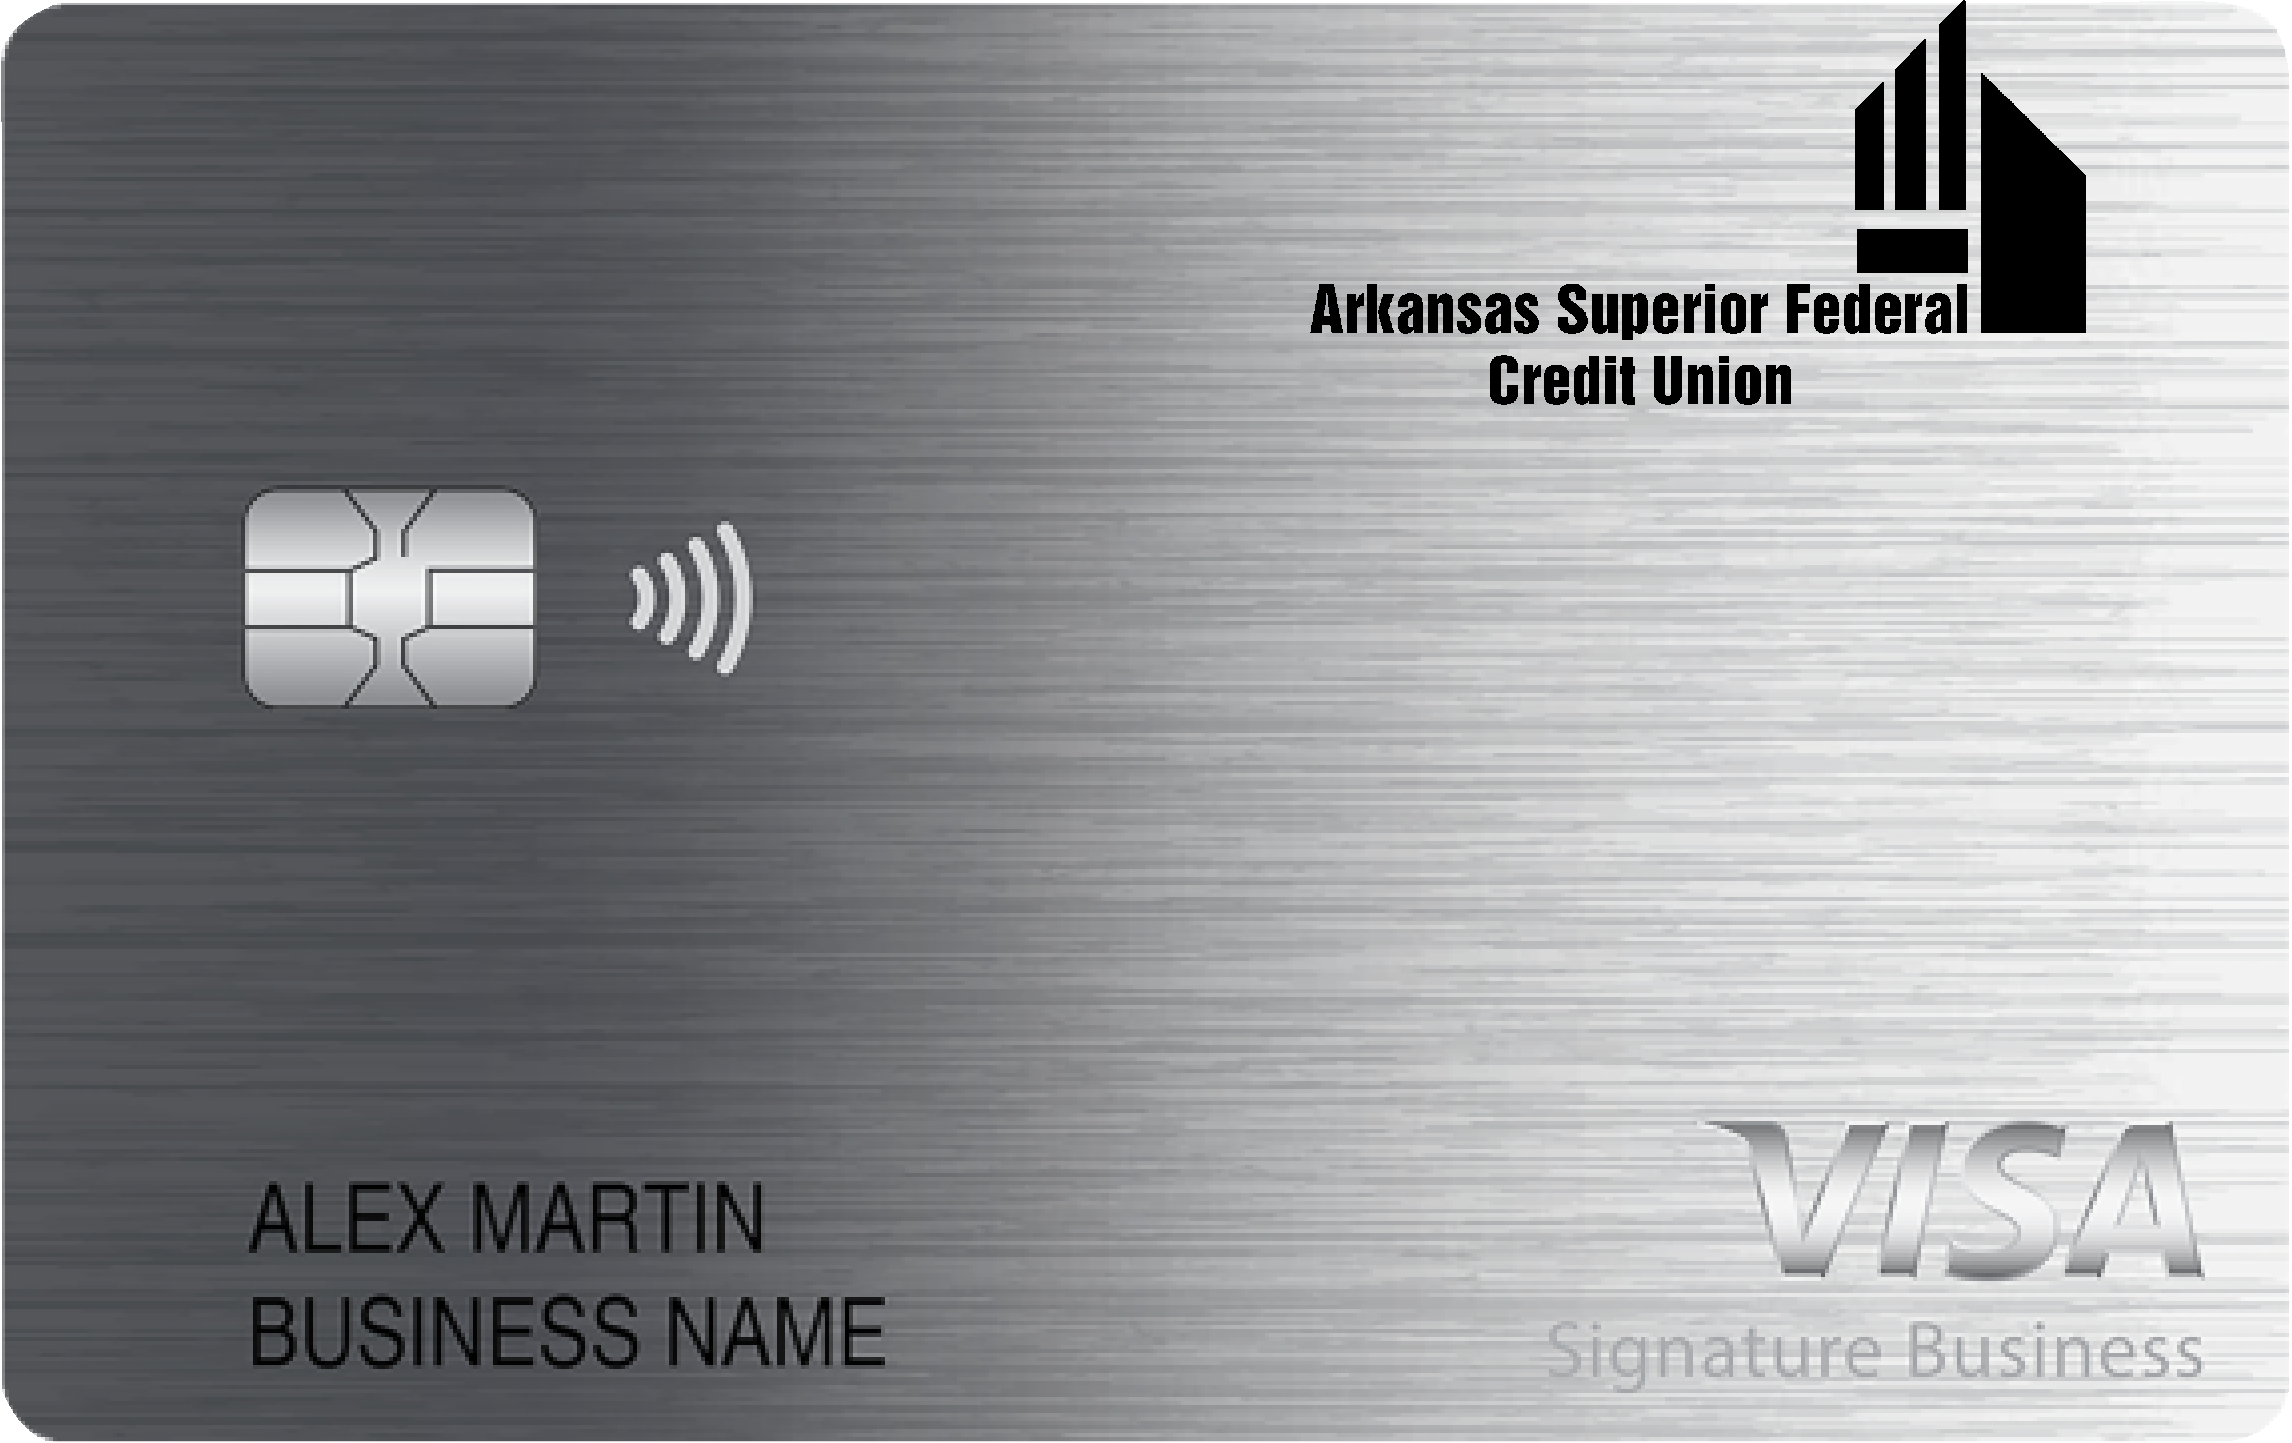 Arkansas Superior Federal Credit Union Smart Business Rewards Card